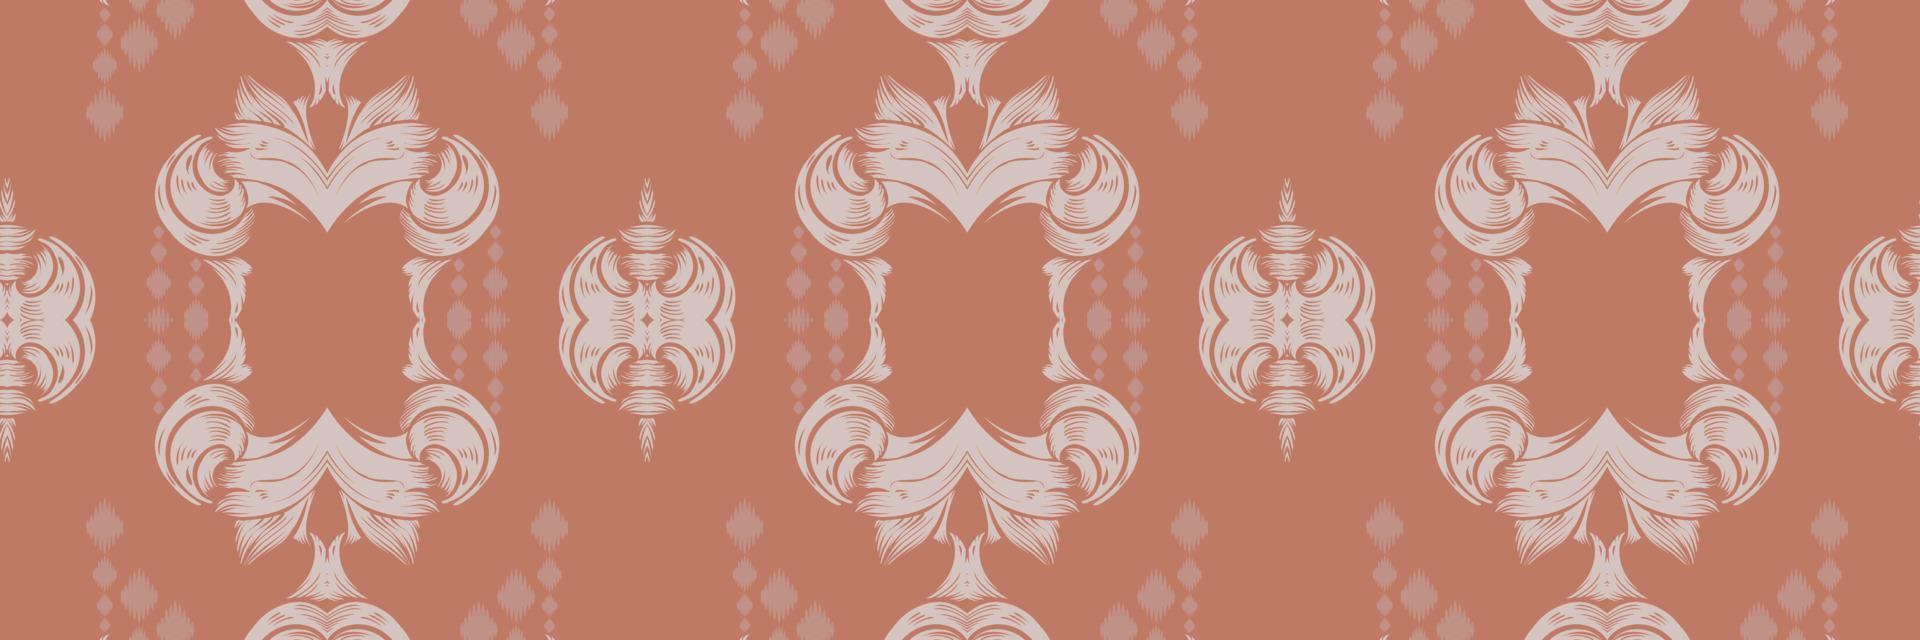 motiv ikat stoff batik textil nahtloses muster digitales vektordesign für druck saree kurti borneo stoff grenze pinsel symbole muster designer vektor